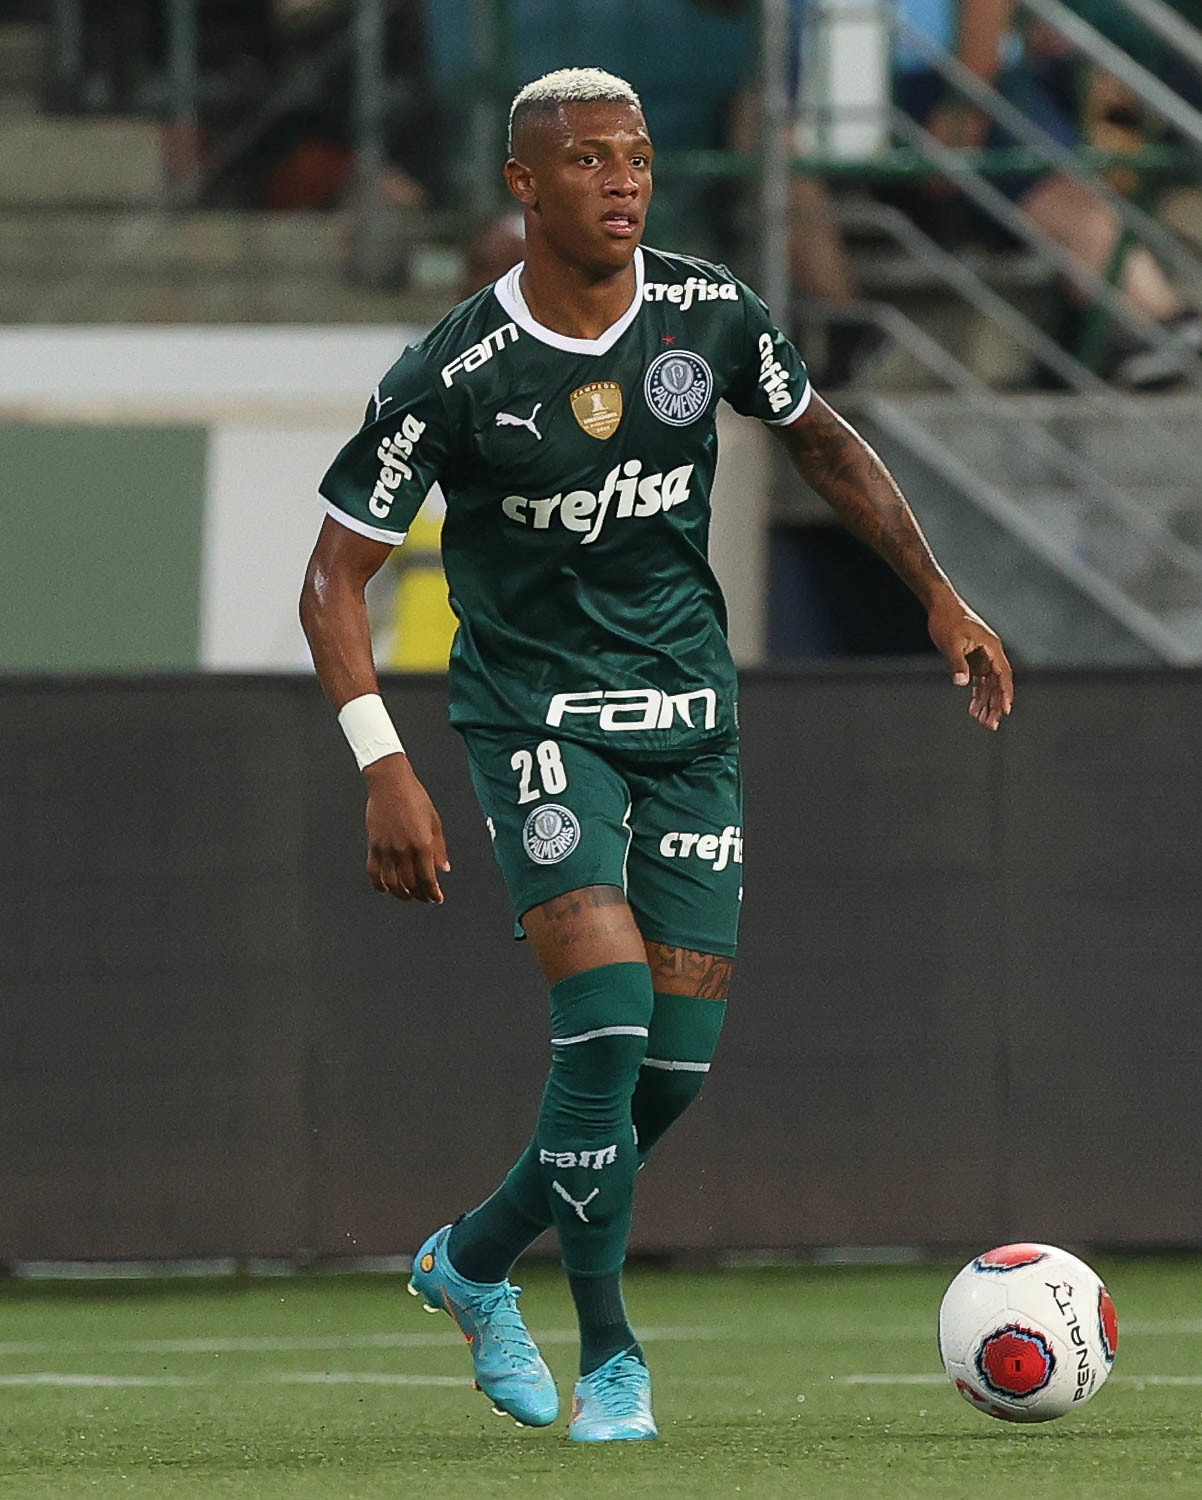 SP - Sao Paulo - 03/26/2022 - PAULISTA 2022, PALMEIRAS X BRAGANTINO -  Palmeiras player Jailson during a